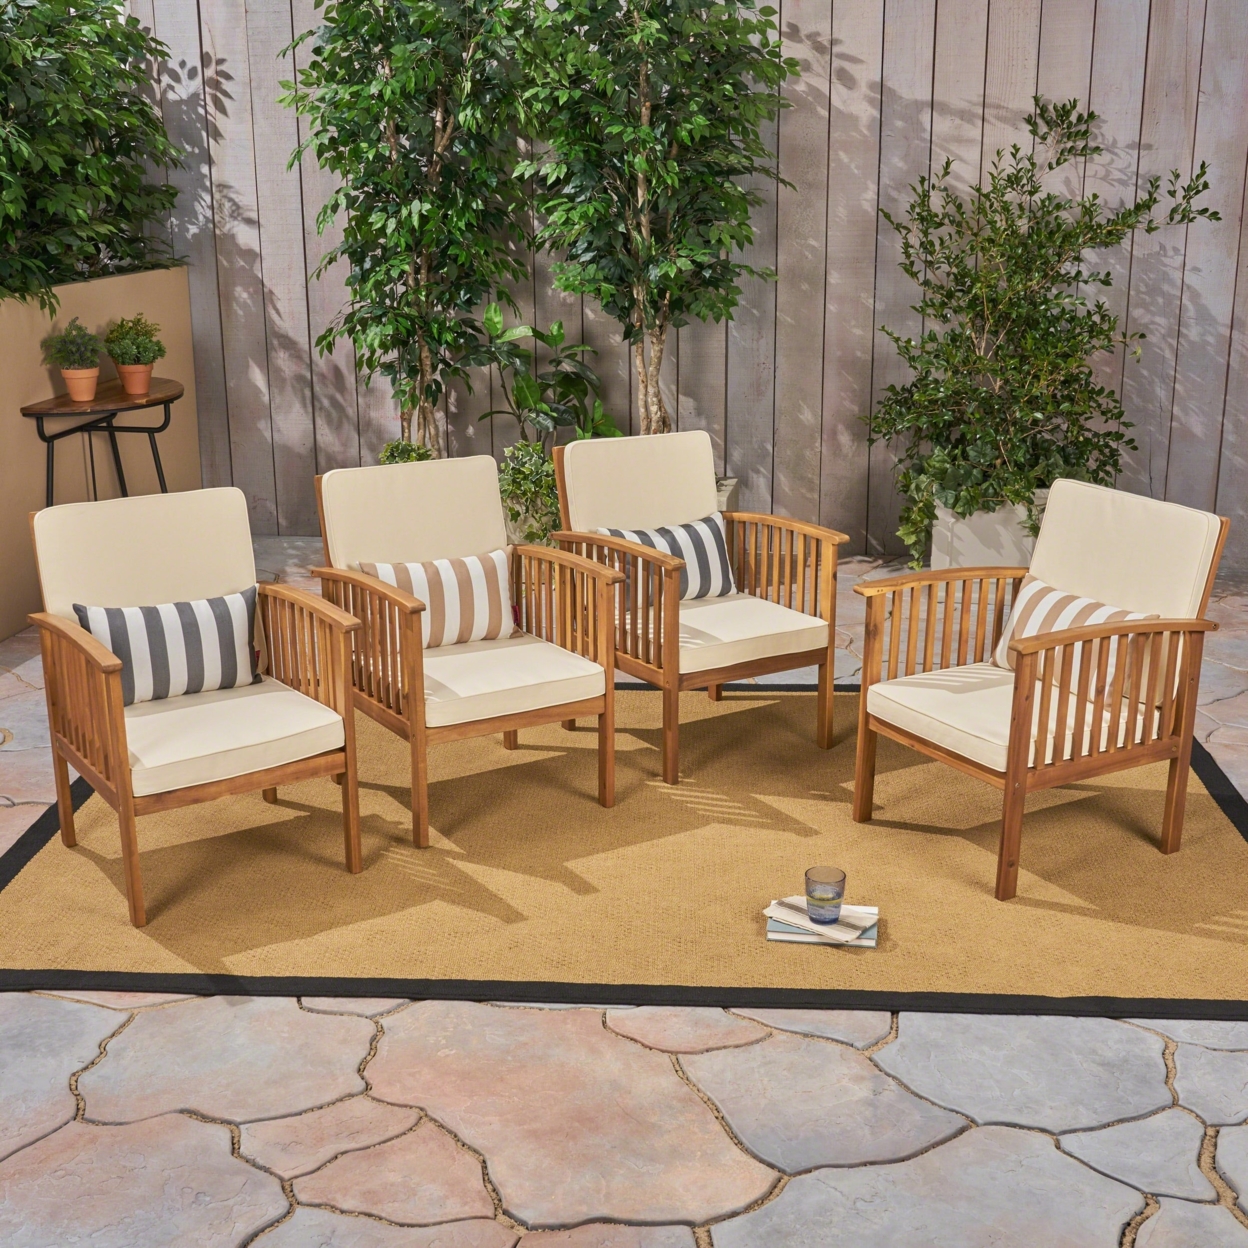 Ray Acacia Outdoor Acacia Wood Club Chairs With Cushions - Cream, Brown Patina, Set Of 2